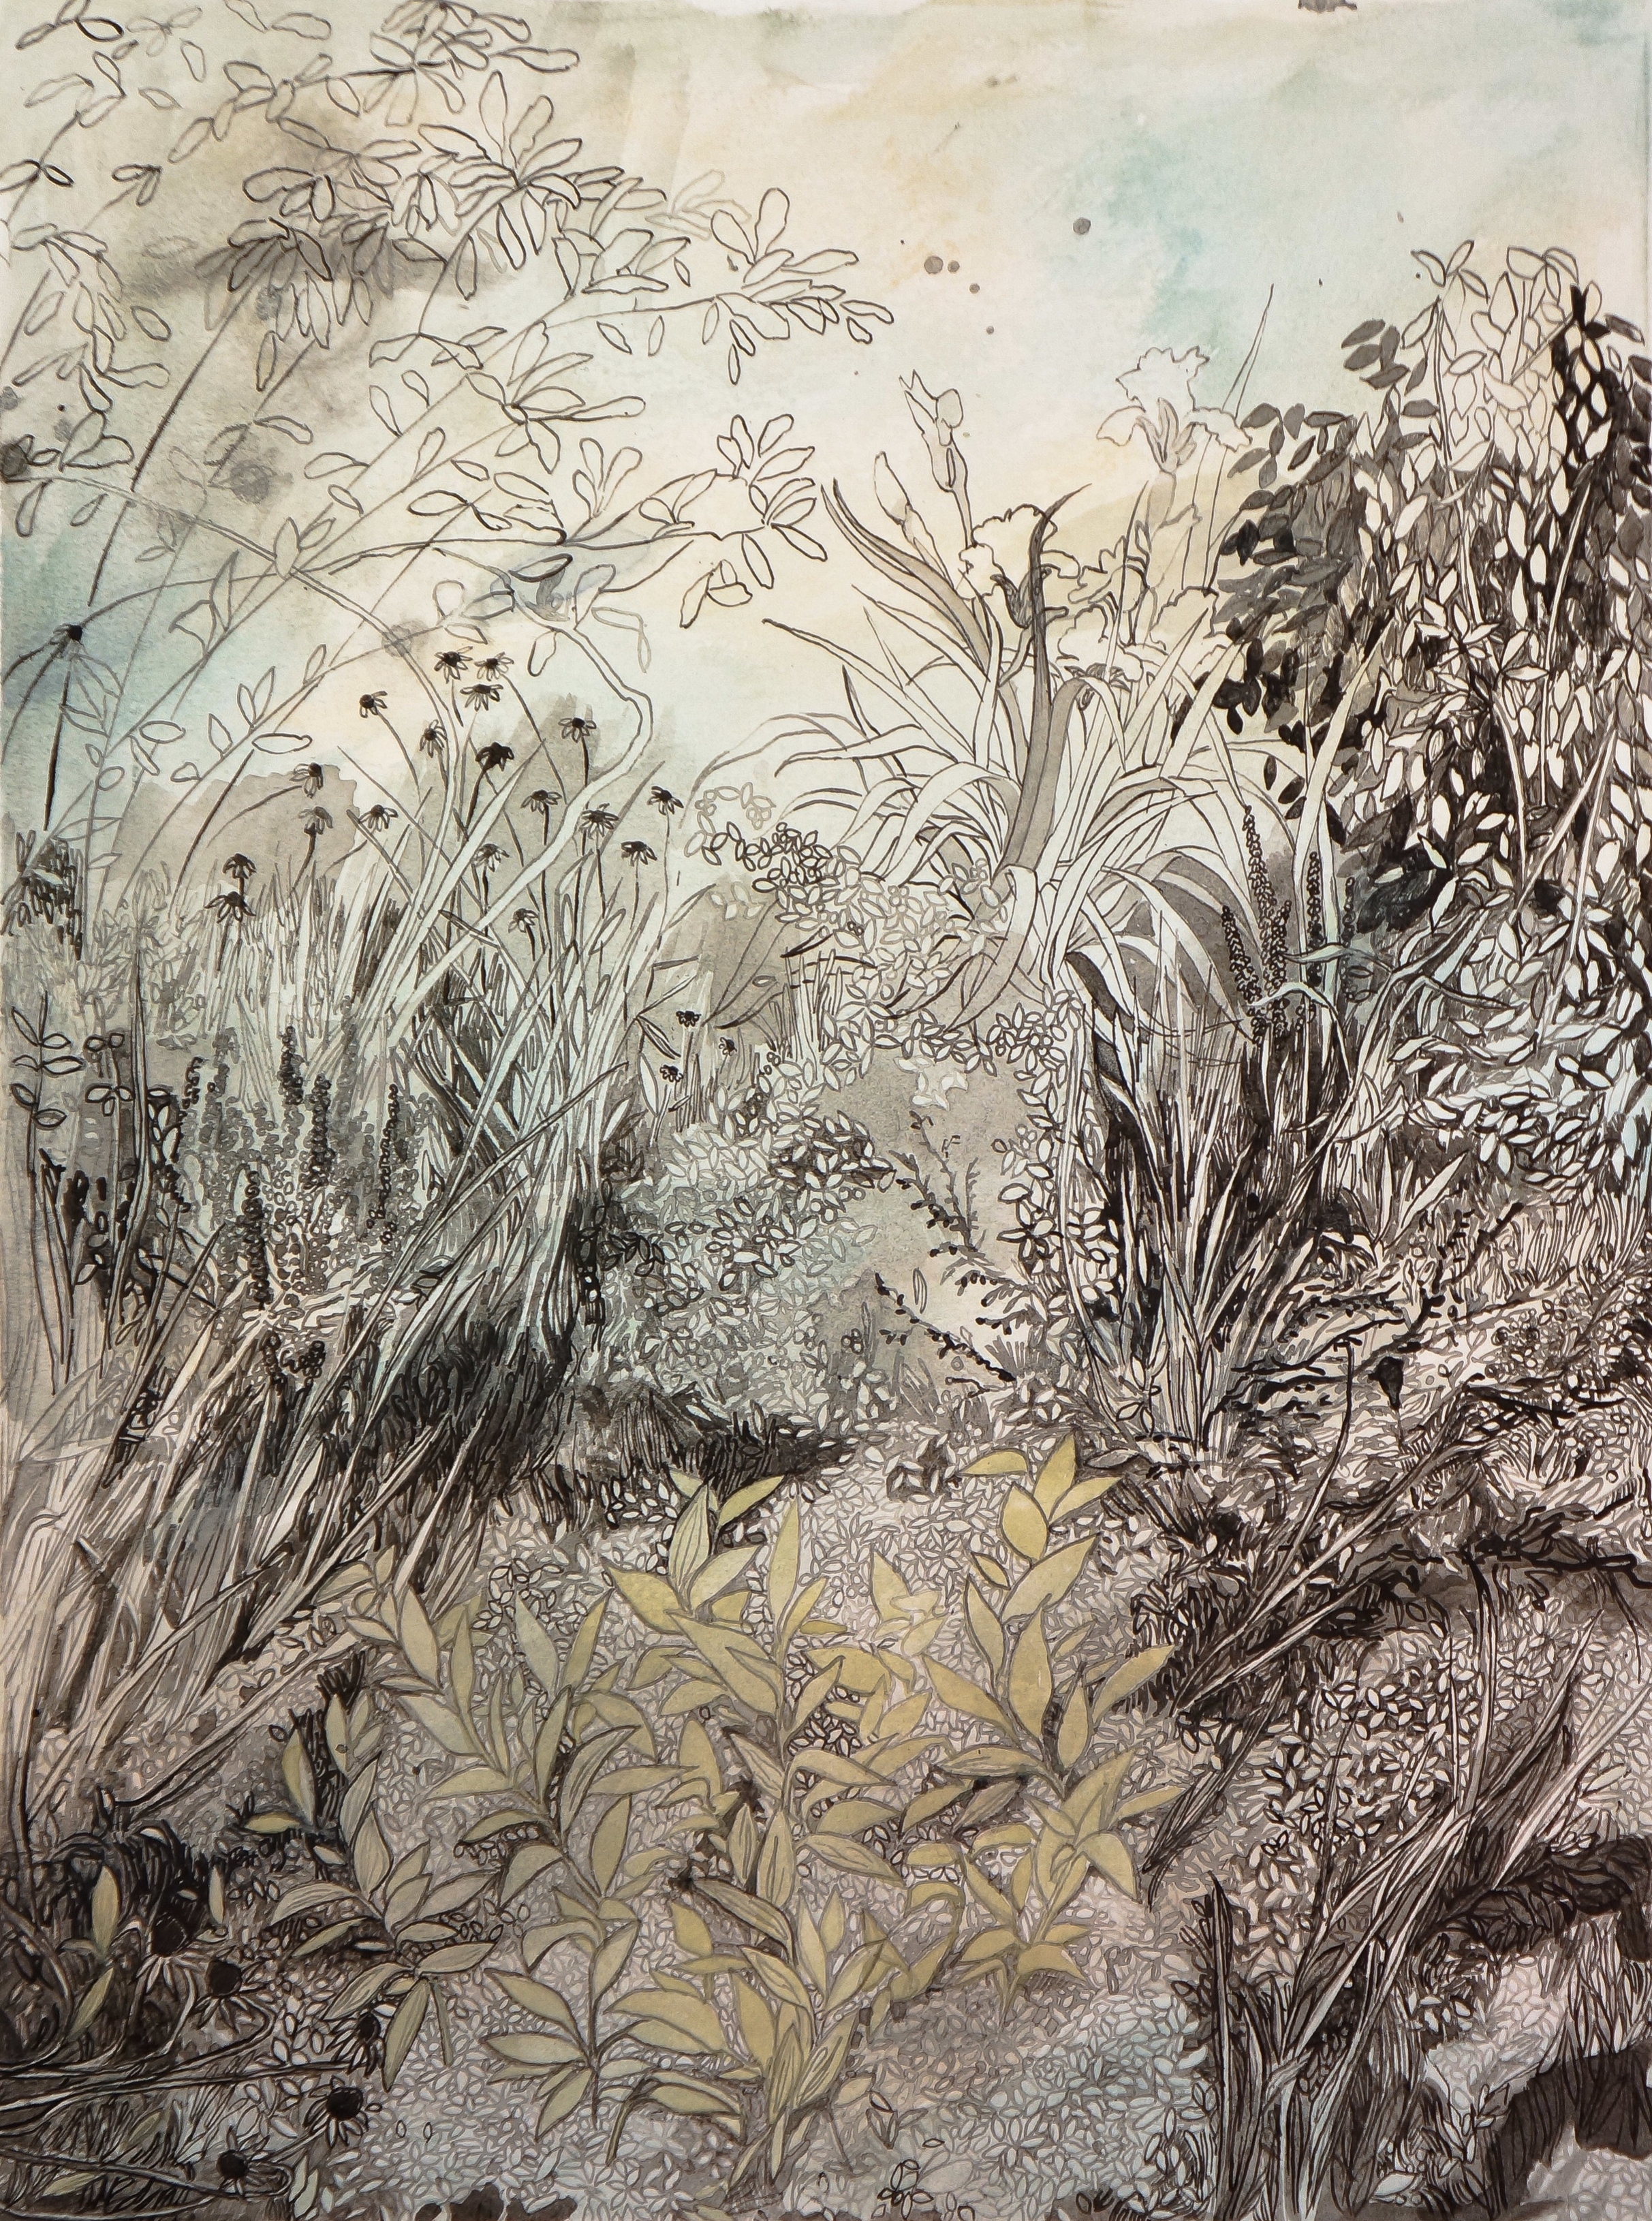  Mount Airy Garden, ink on paper, 2015 